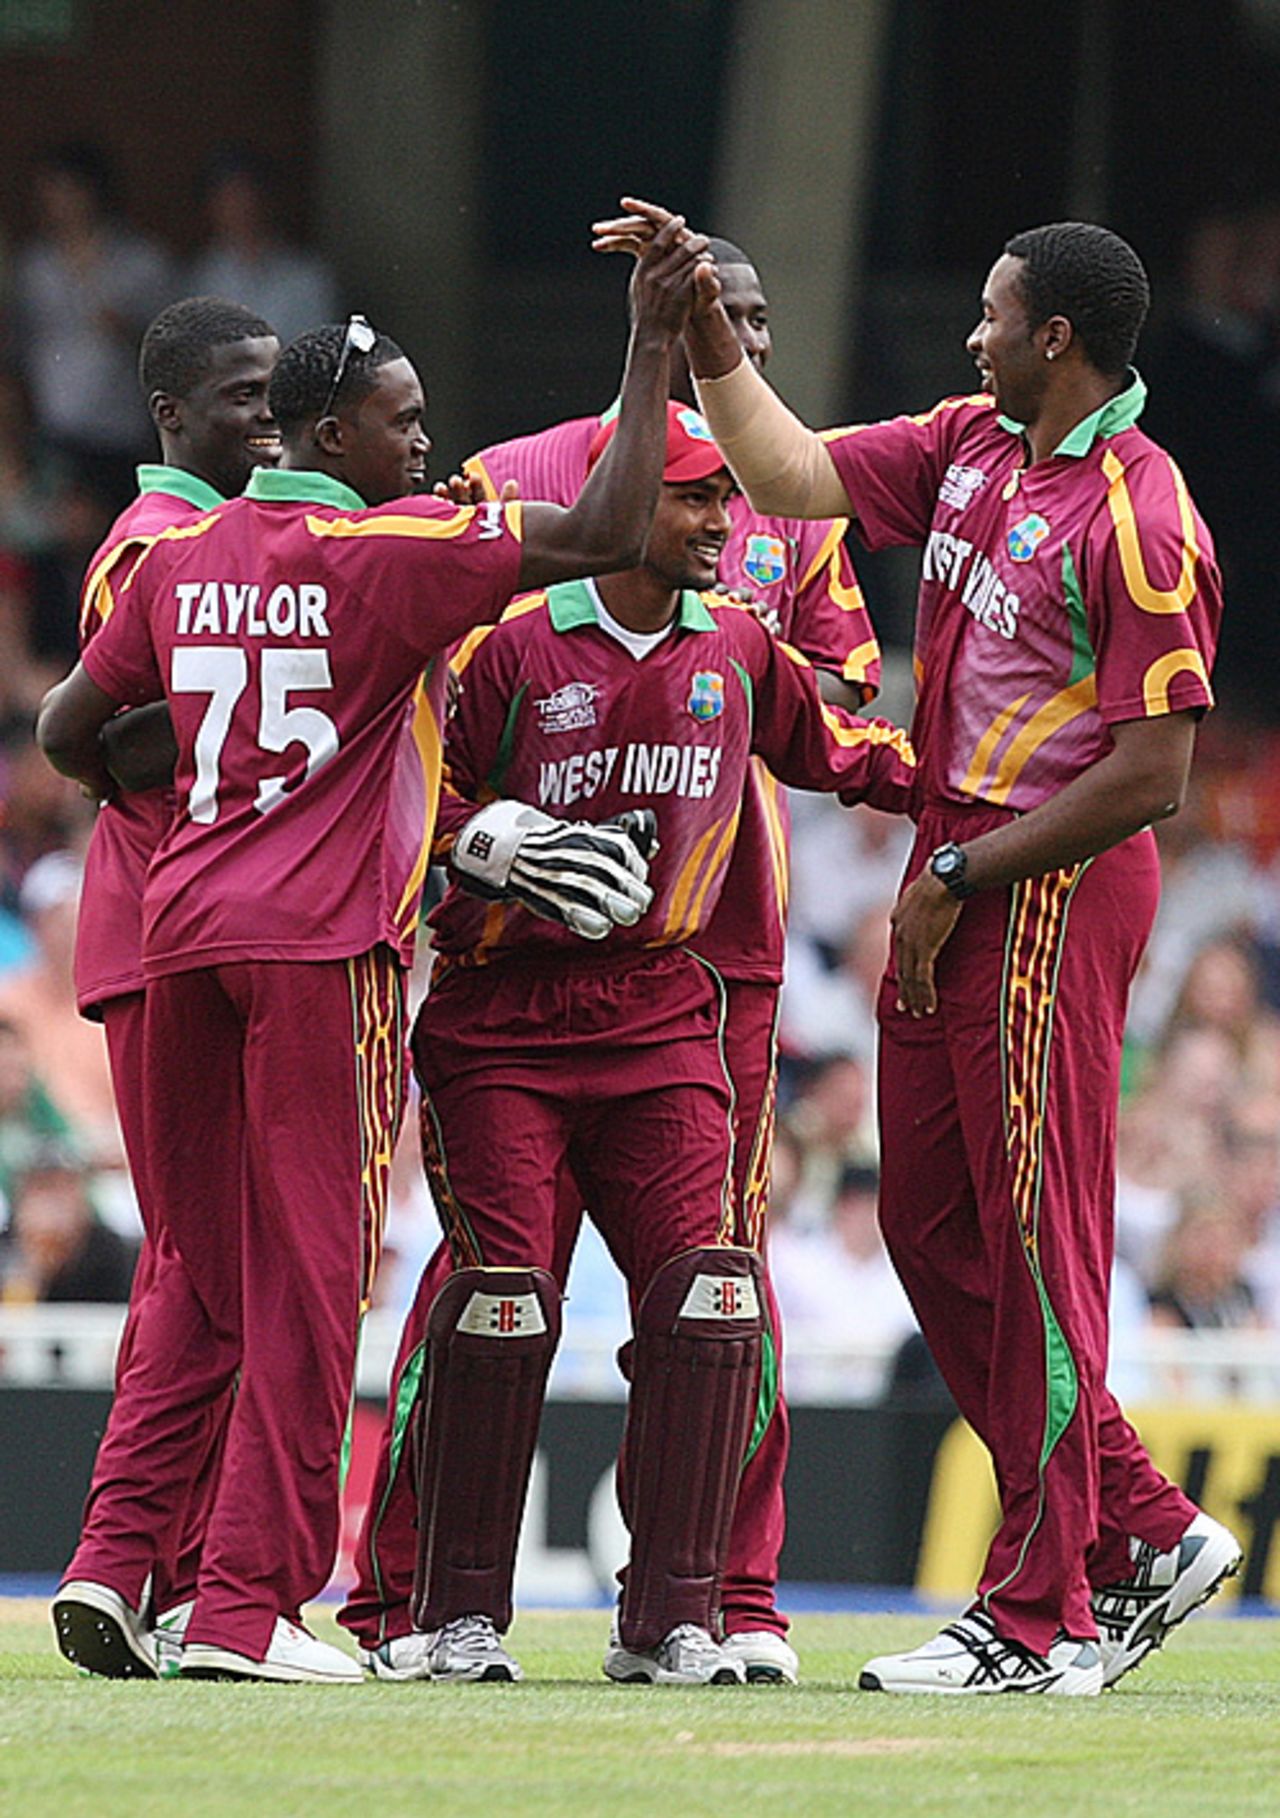 Denesh Ramdin is congratulated on a useful catch to dismiss Luke Wright, England v West Indies, ICC World Twenty20, The Oval, June 15, 2009